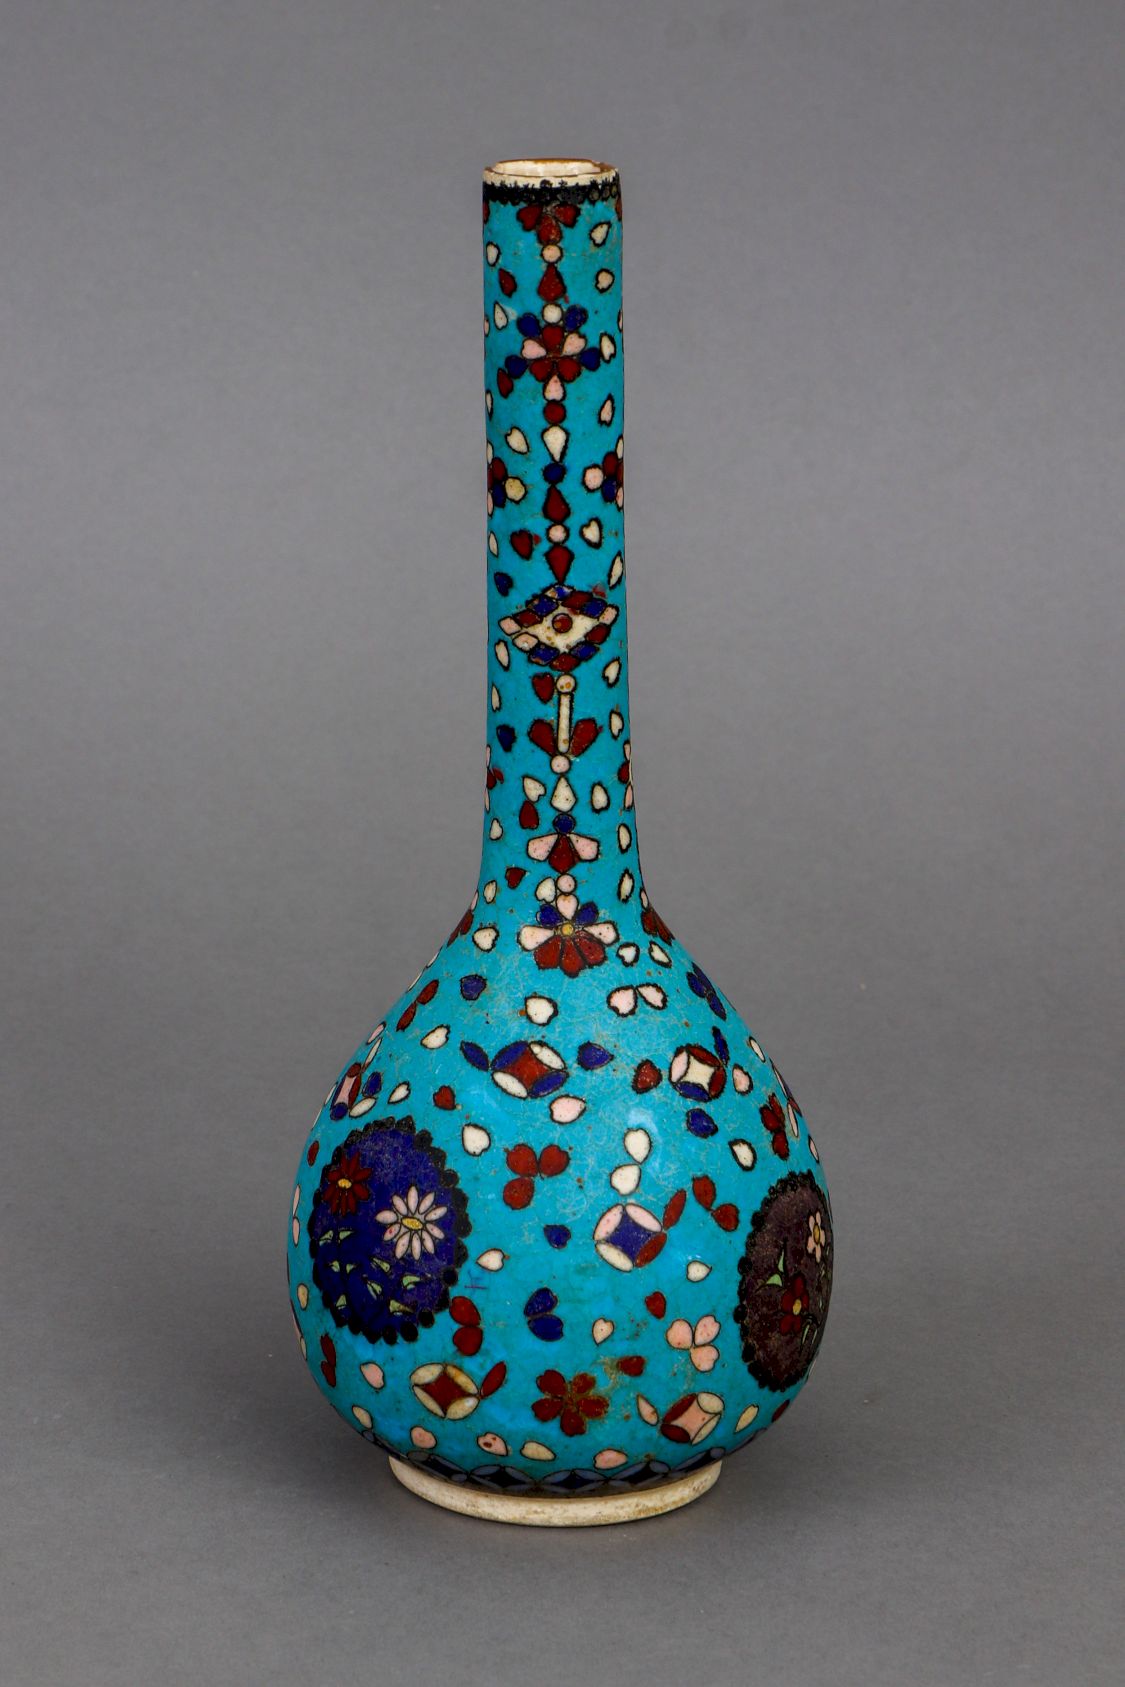 Asiatisches Keramikvase mit Cloisonné-Dekor - Image 2 of 4